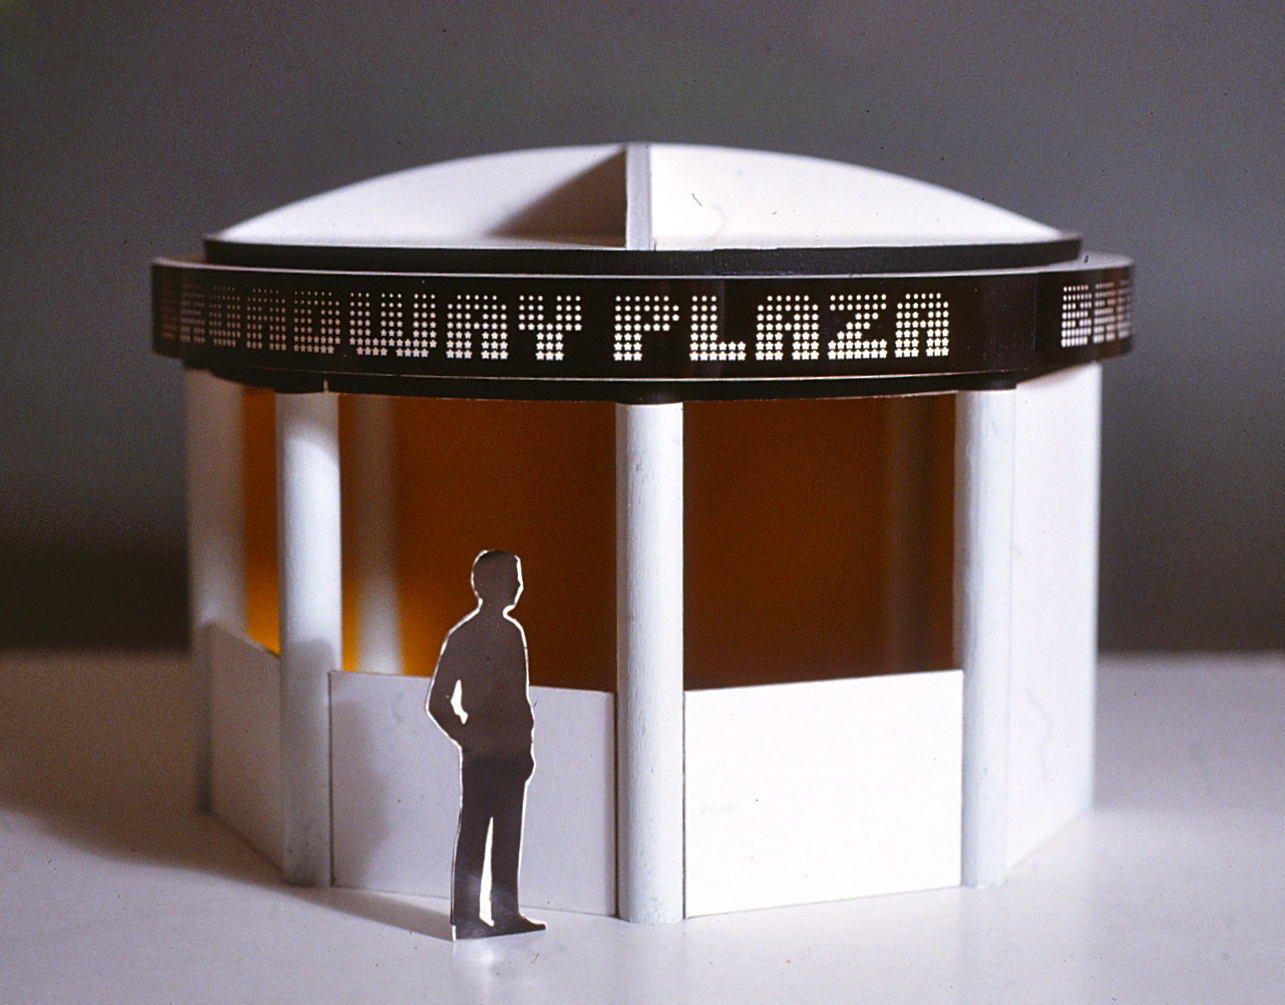 Model of the Broadway Plaza information kiosk.